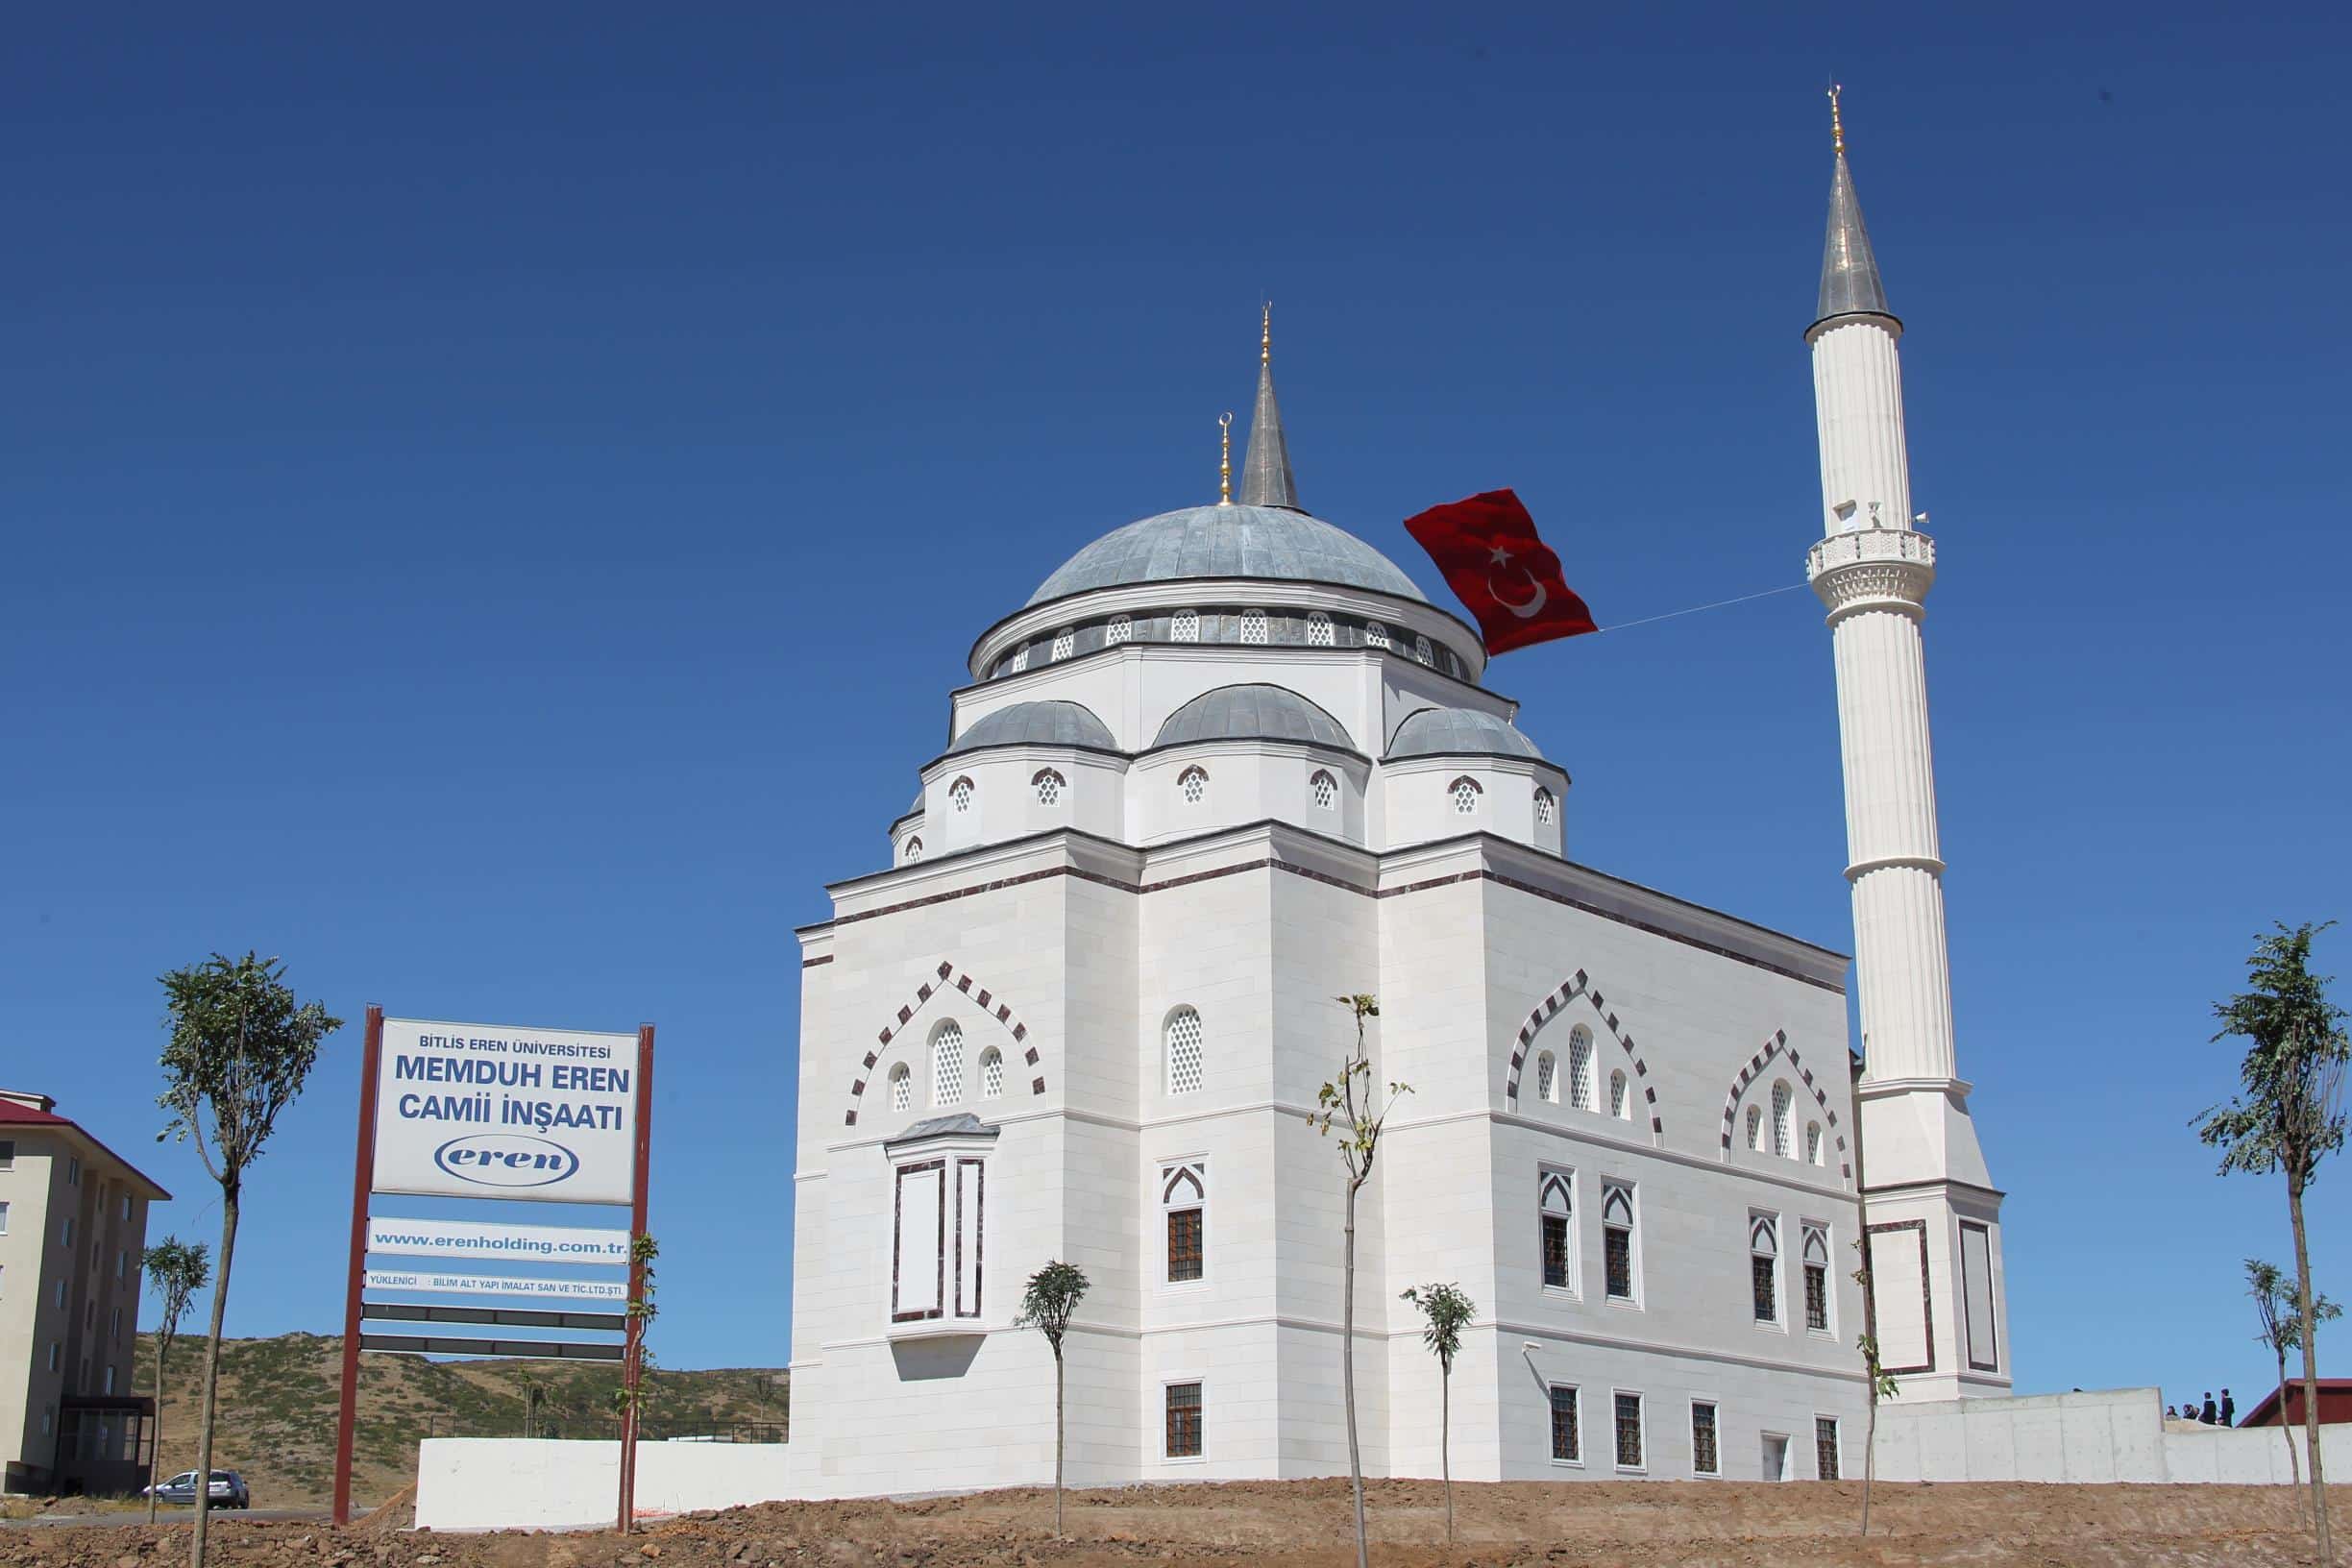 Memduh Eren Camii İbadete Açıldı